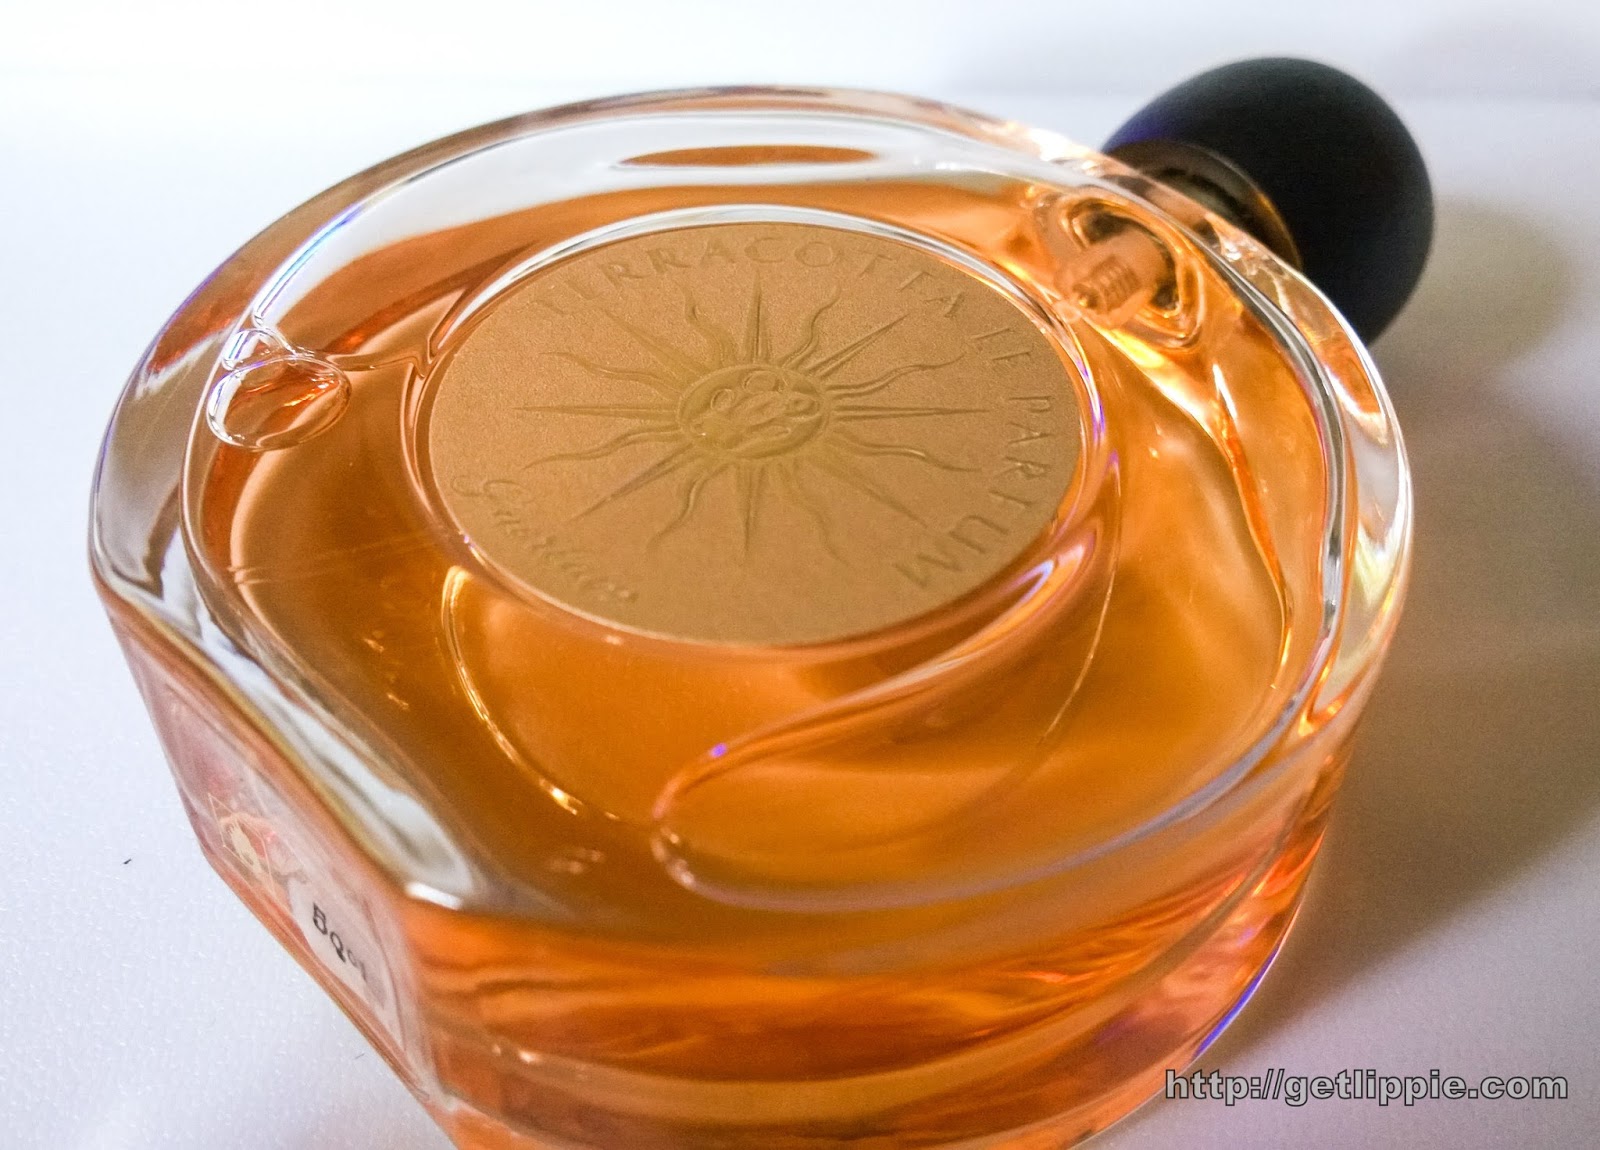 indgang Afvise fungere Guerlain Reissues Terracotta le Parfum for 2015 - Get Lippie